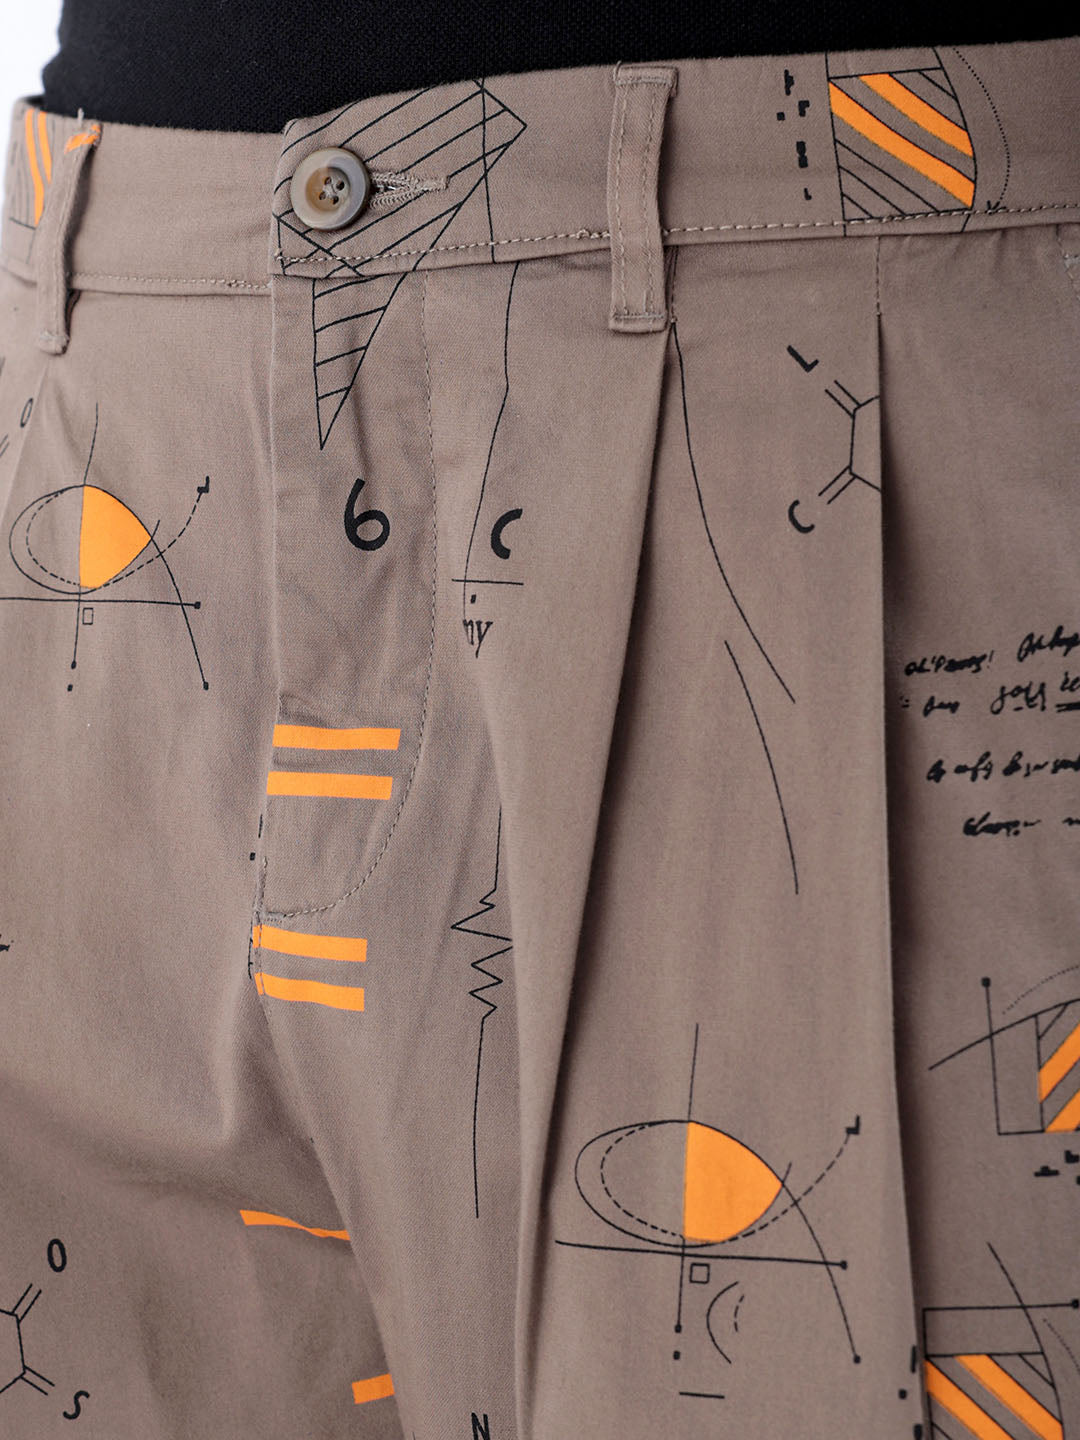 Shop Men Printed Trousers Online.